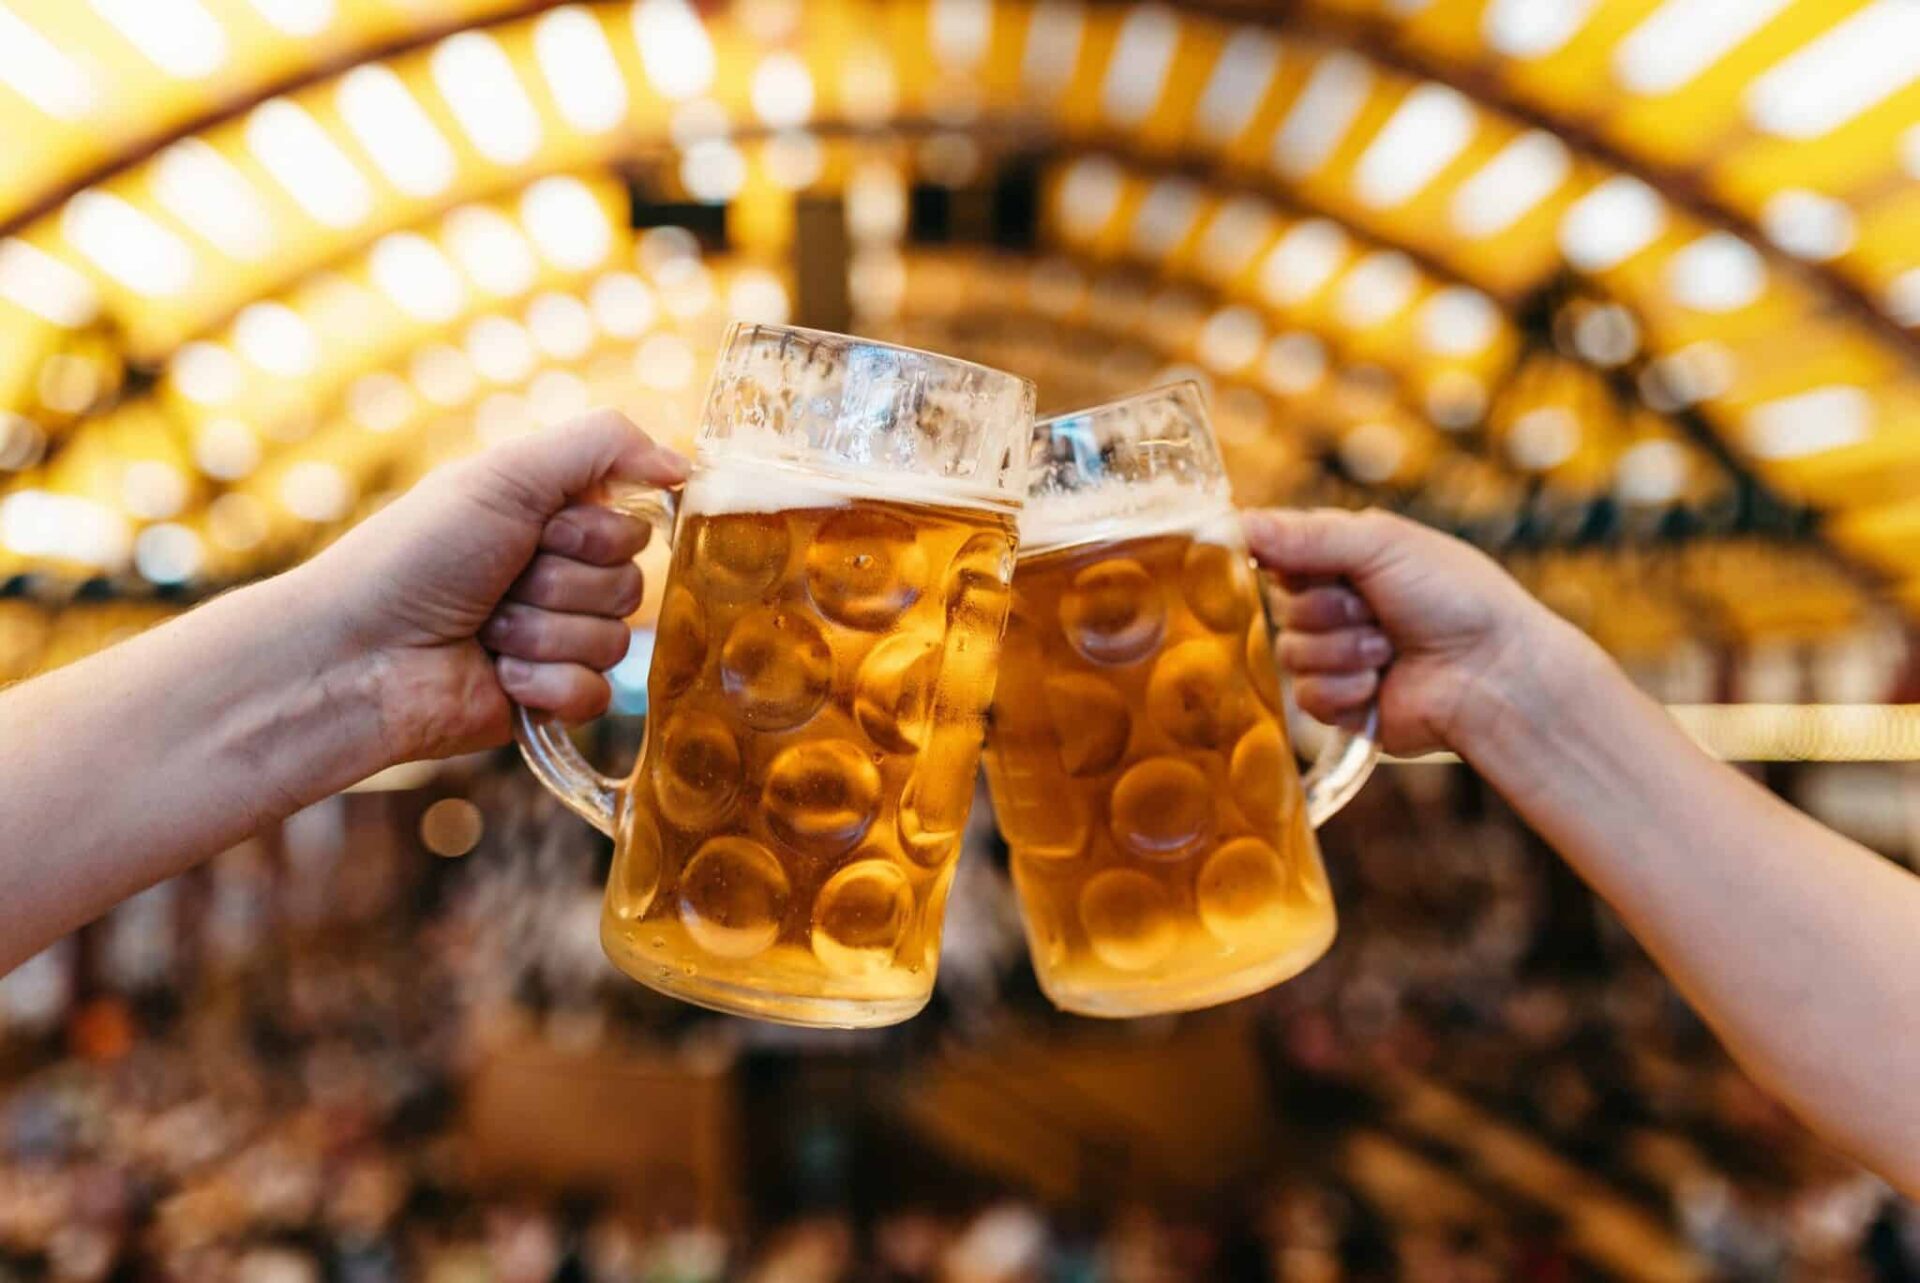 Beer glasses clinking together